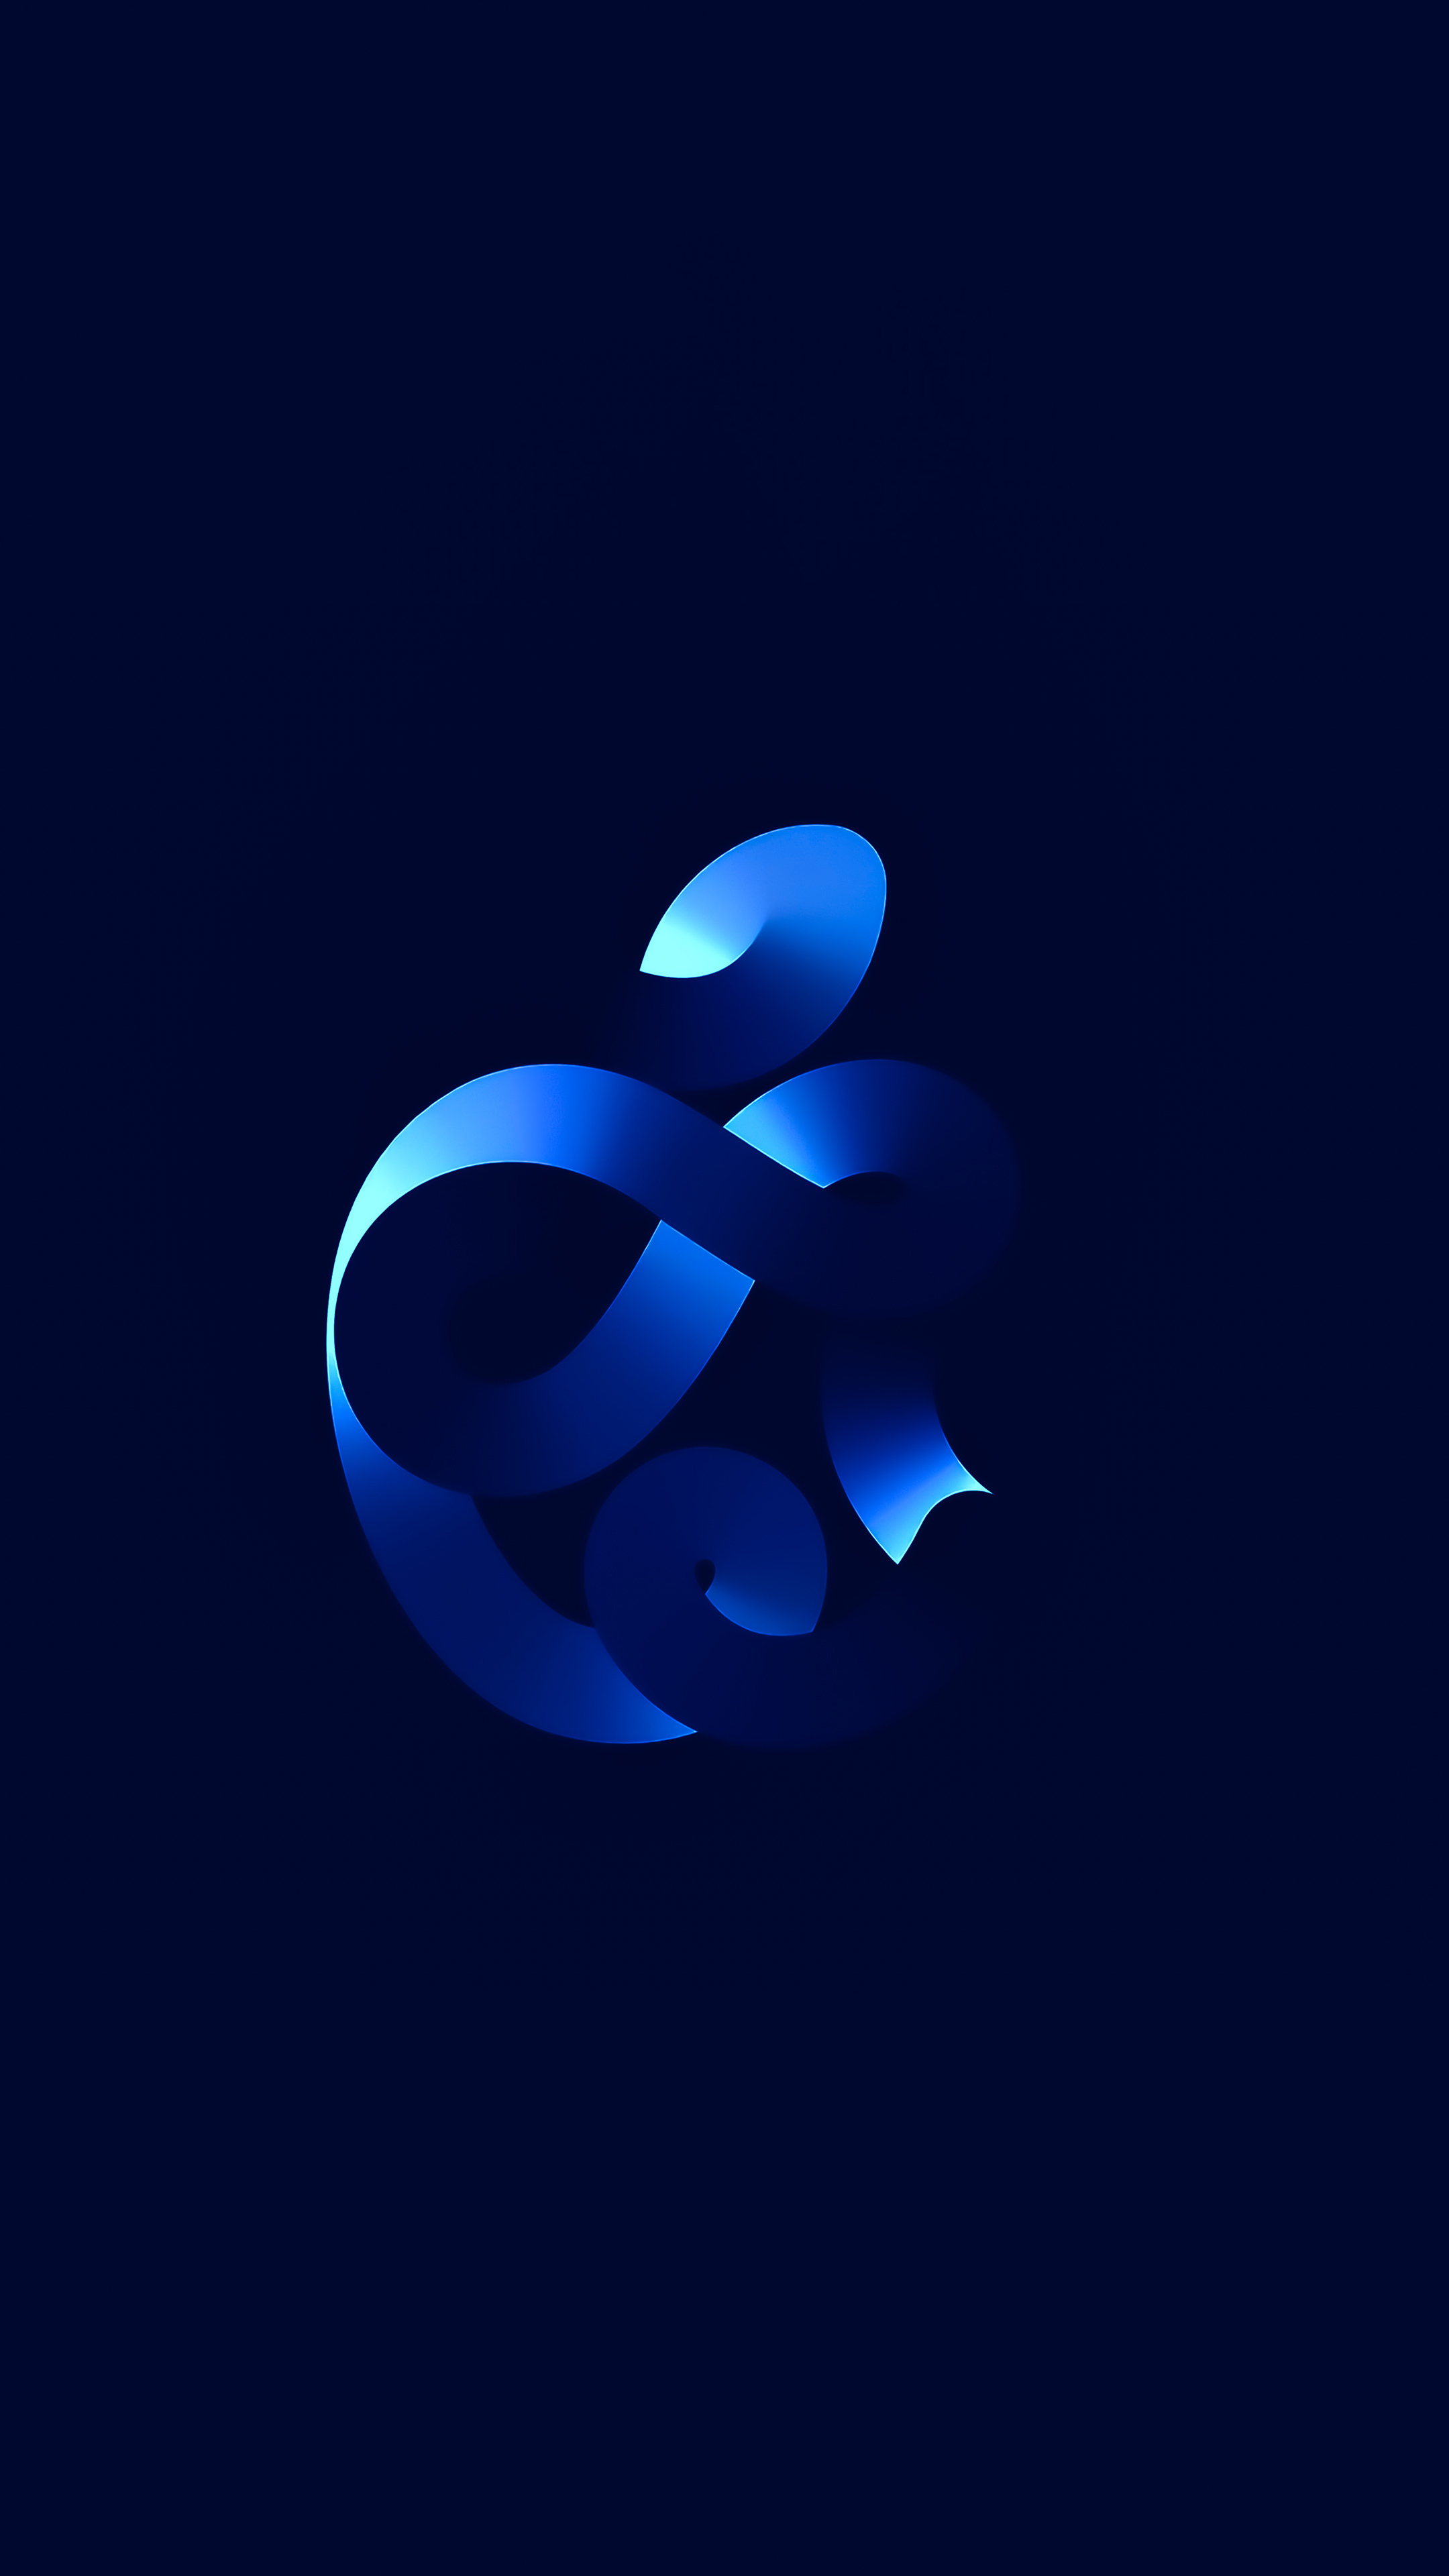 apple-event-2020-blue-logo-4k-cl.jpg